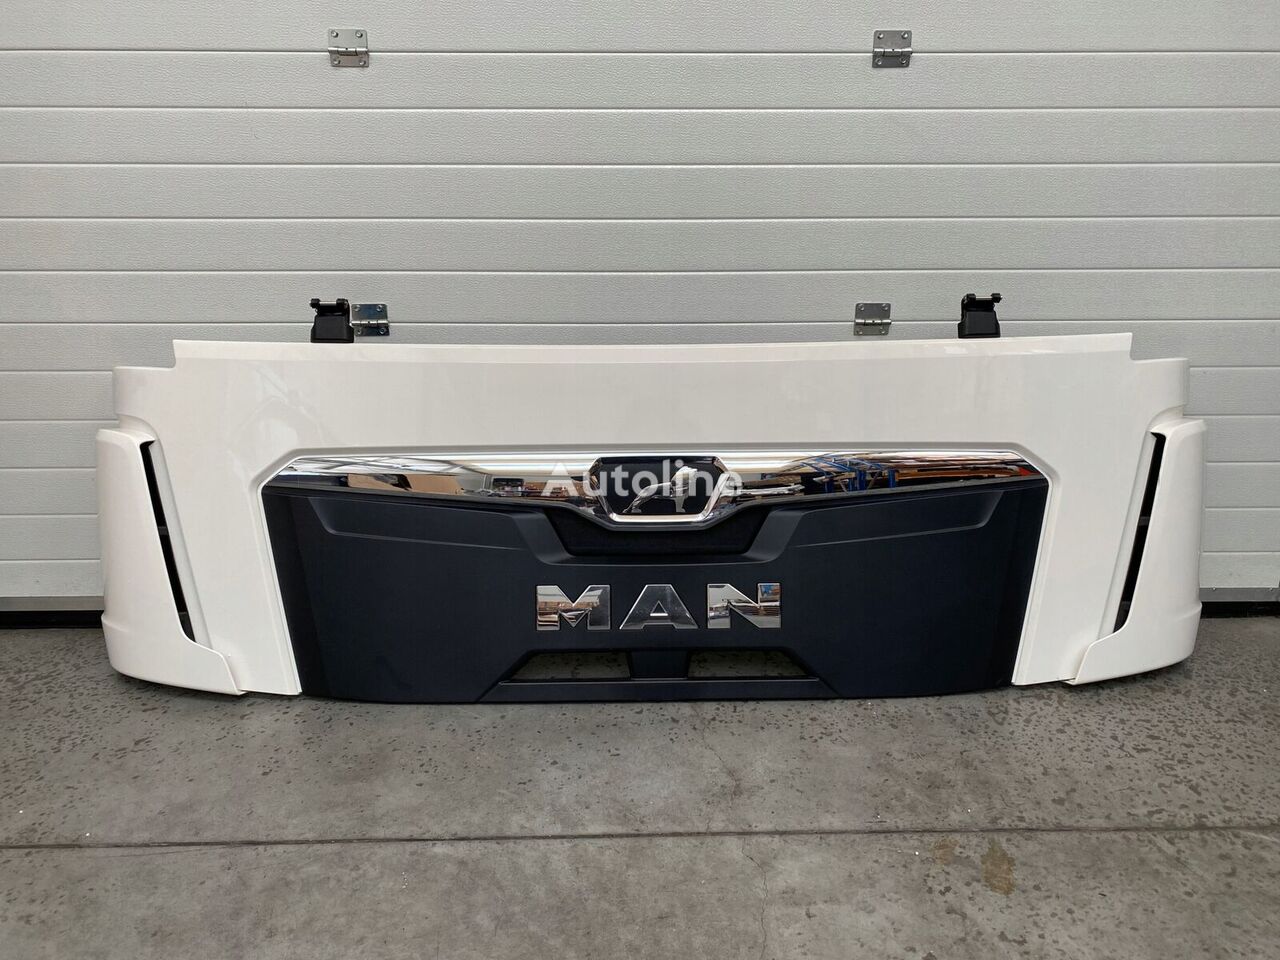 MASKA ATRAPA GRILL radiator grille for MAN TGL NOWY MODEL 2021r truck tractor